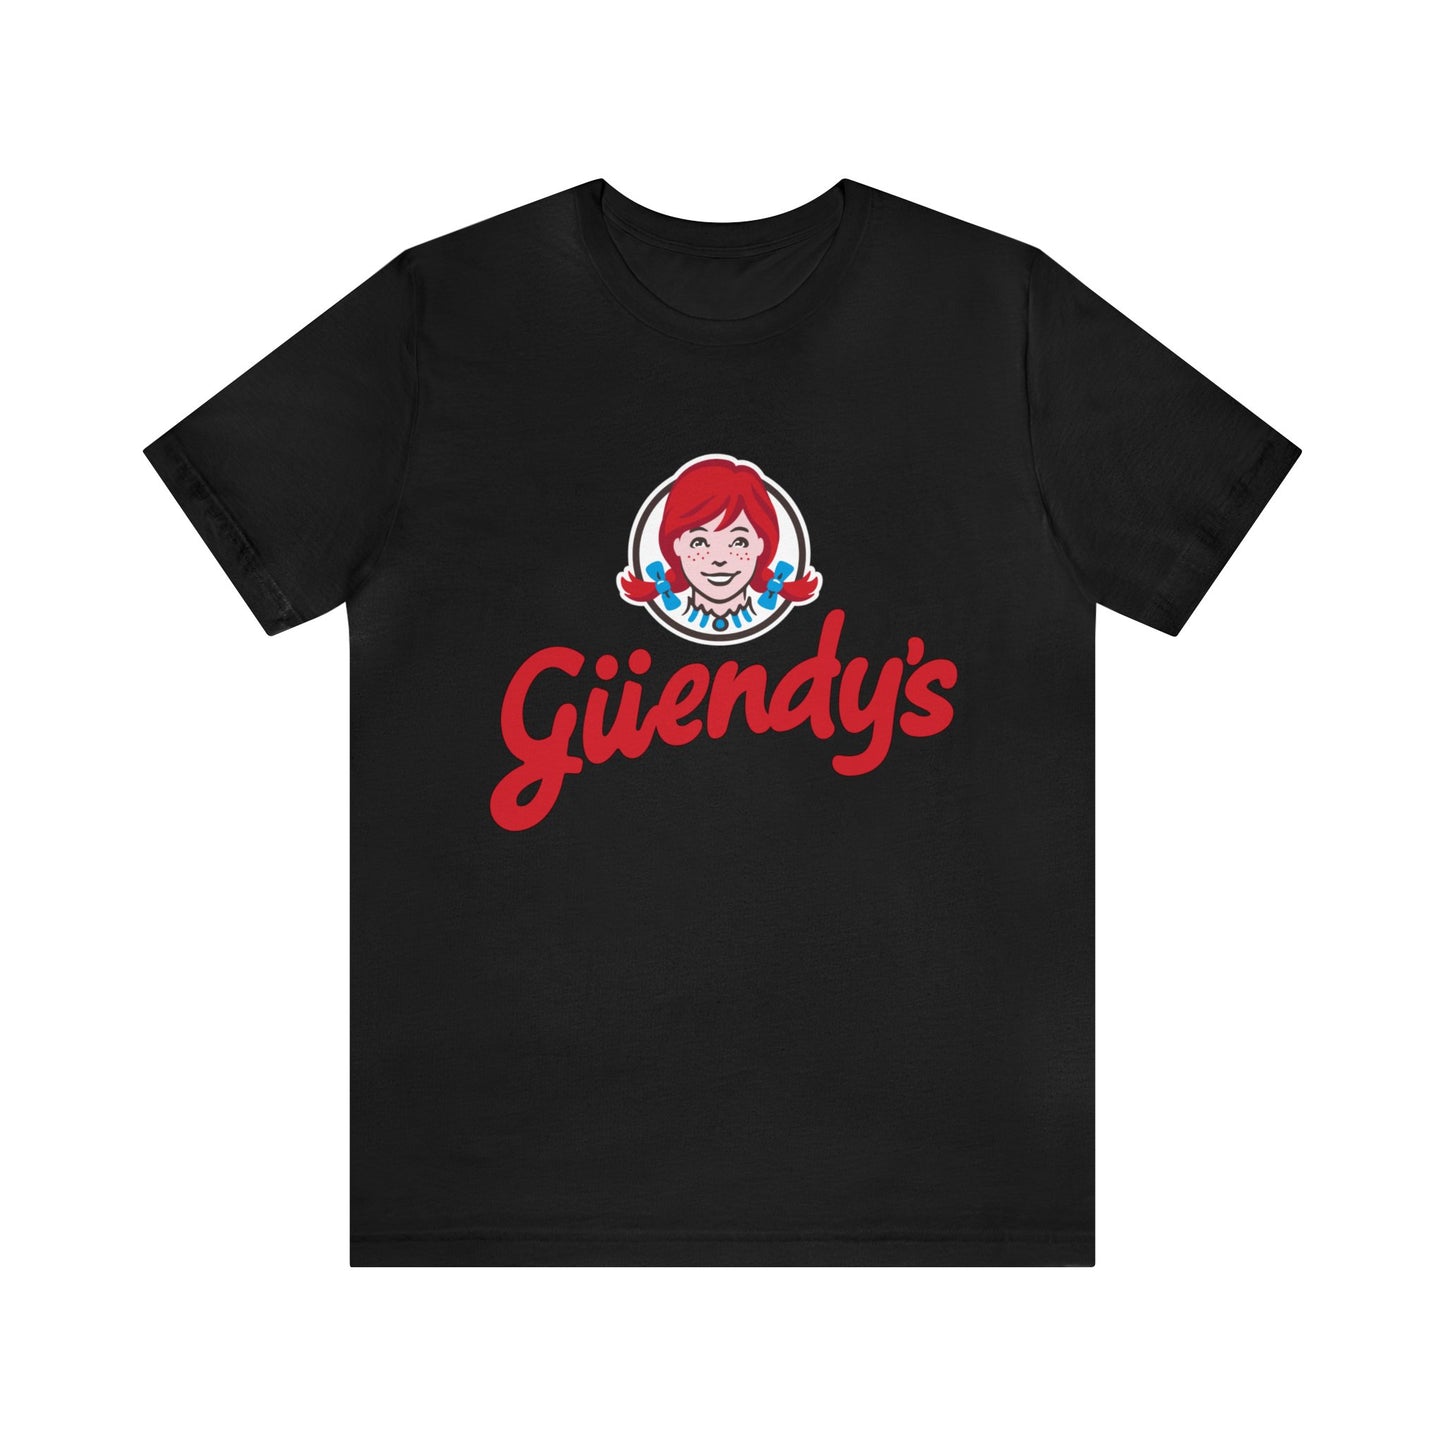 Guendy's T-Shirt - Wendy's Hispanic Logo Parody